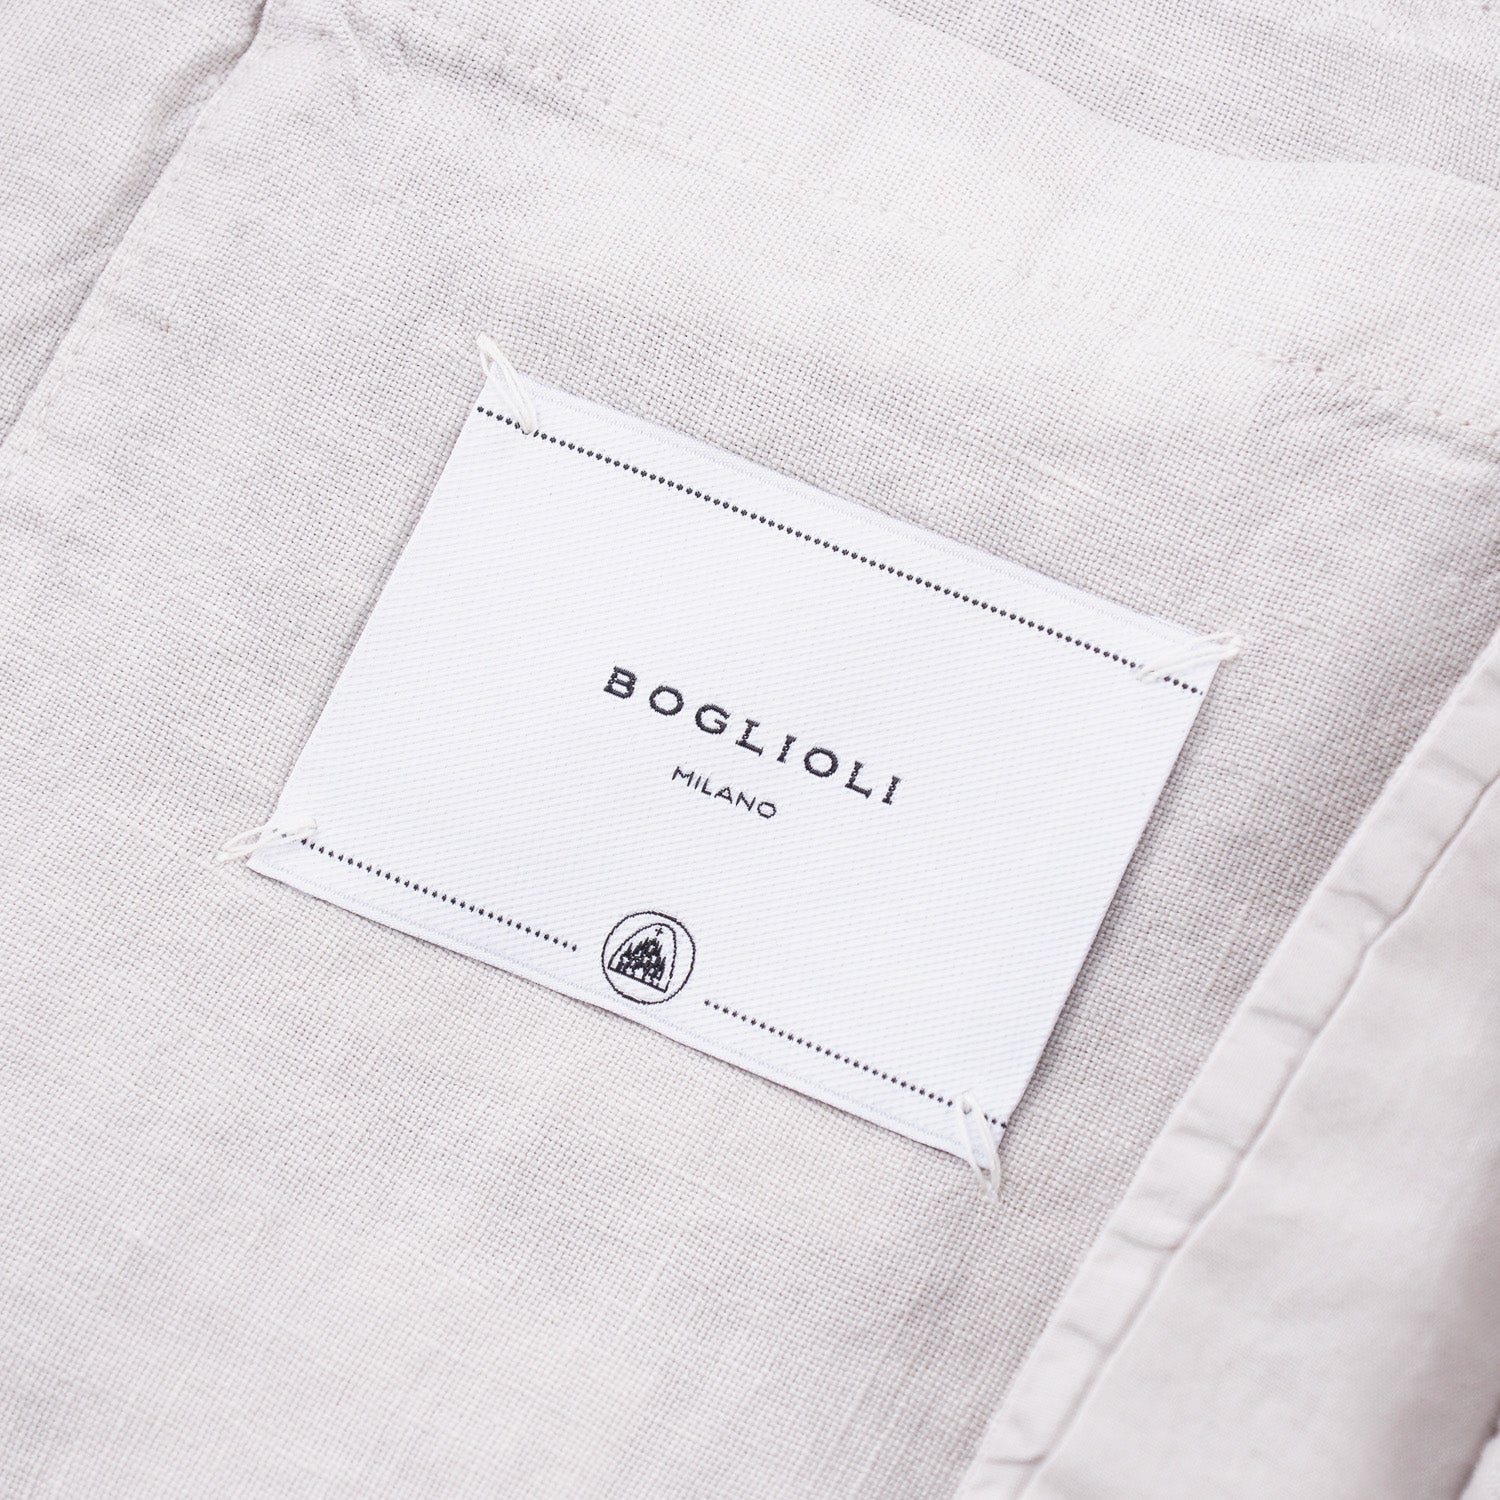 Boglioli Pure Linen Field Jacket - Top Shelf Apparel